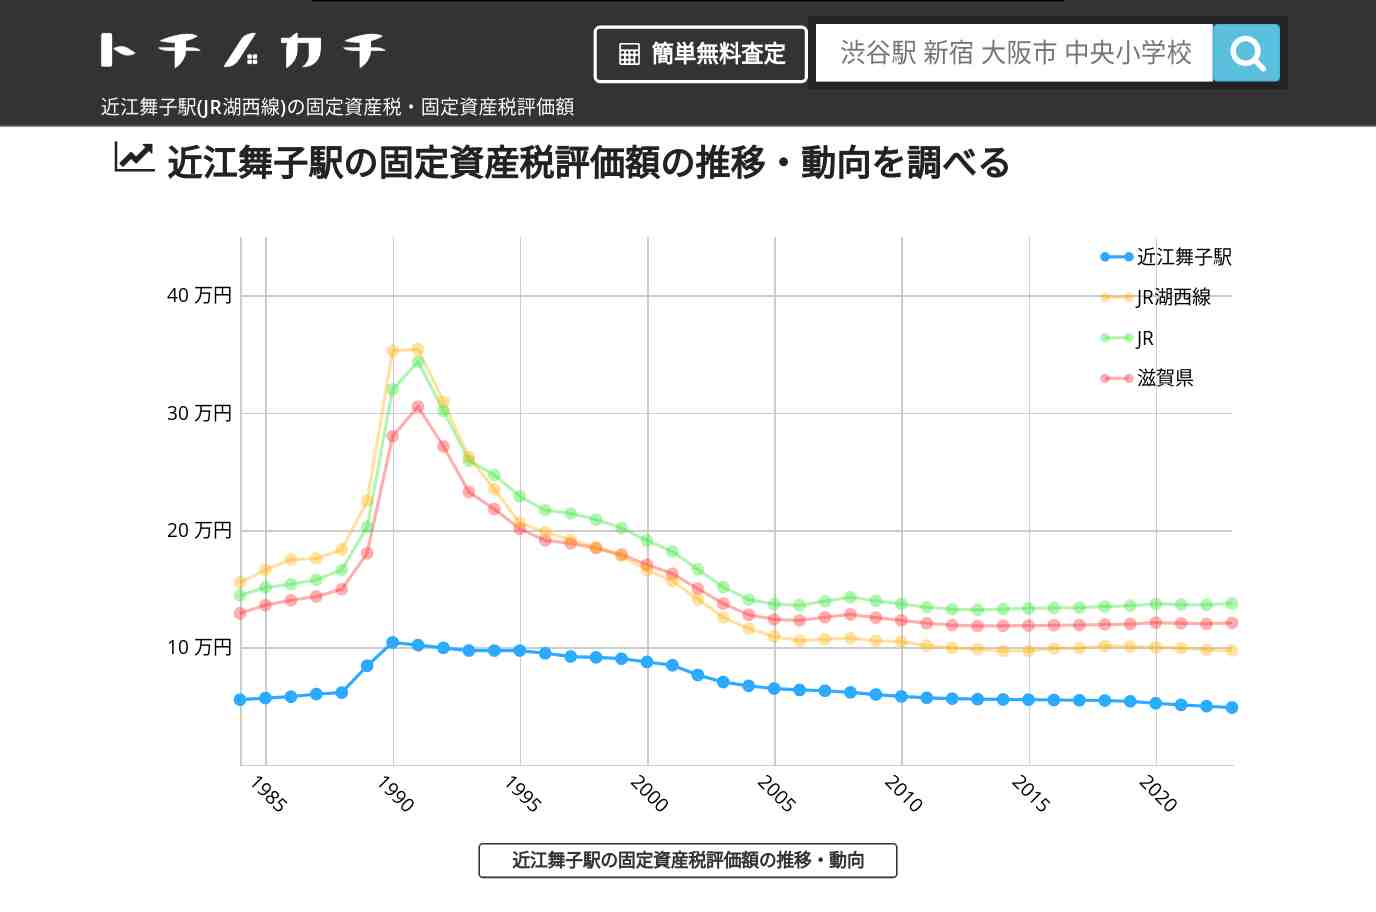 近江舞子駅(JR湖西線)の固定資産税・固定資産税評価額 | トチノカチ